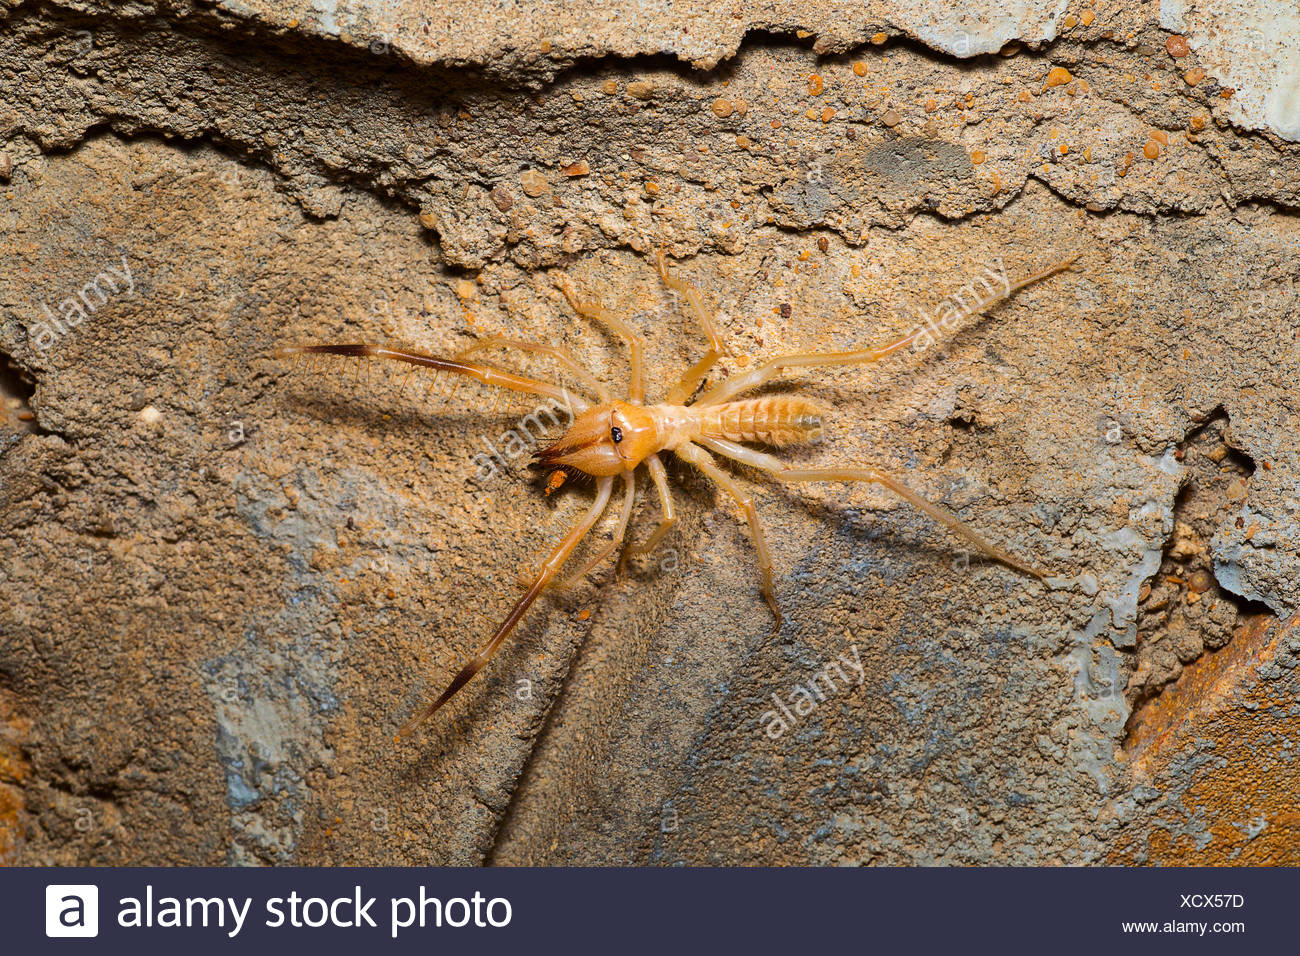 Camel Spider Solifuge Desert Nationalpark Rajasthan Indien Stockfotografie Alamy